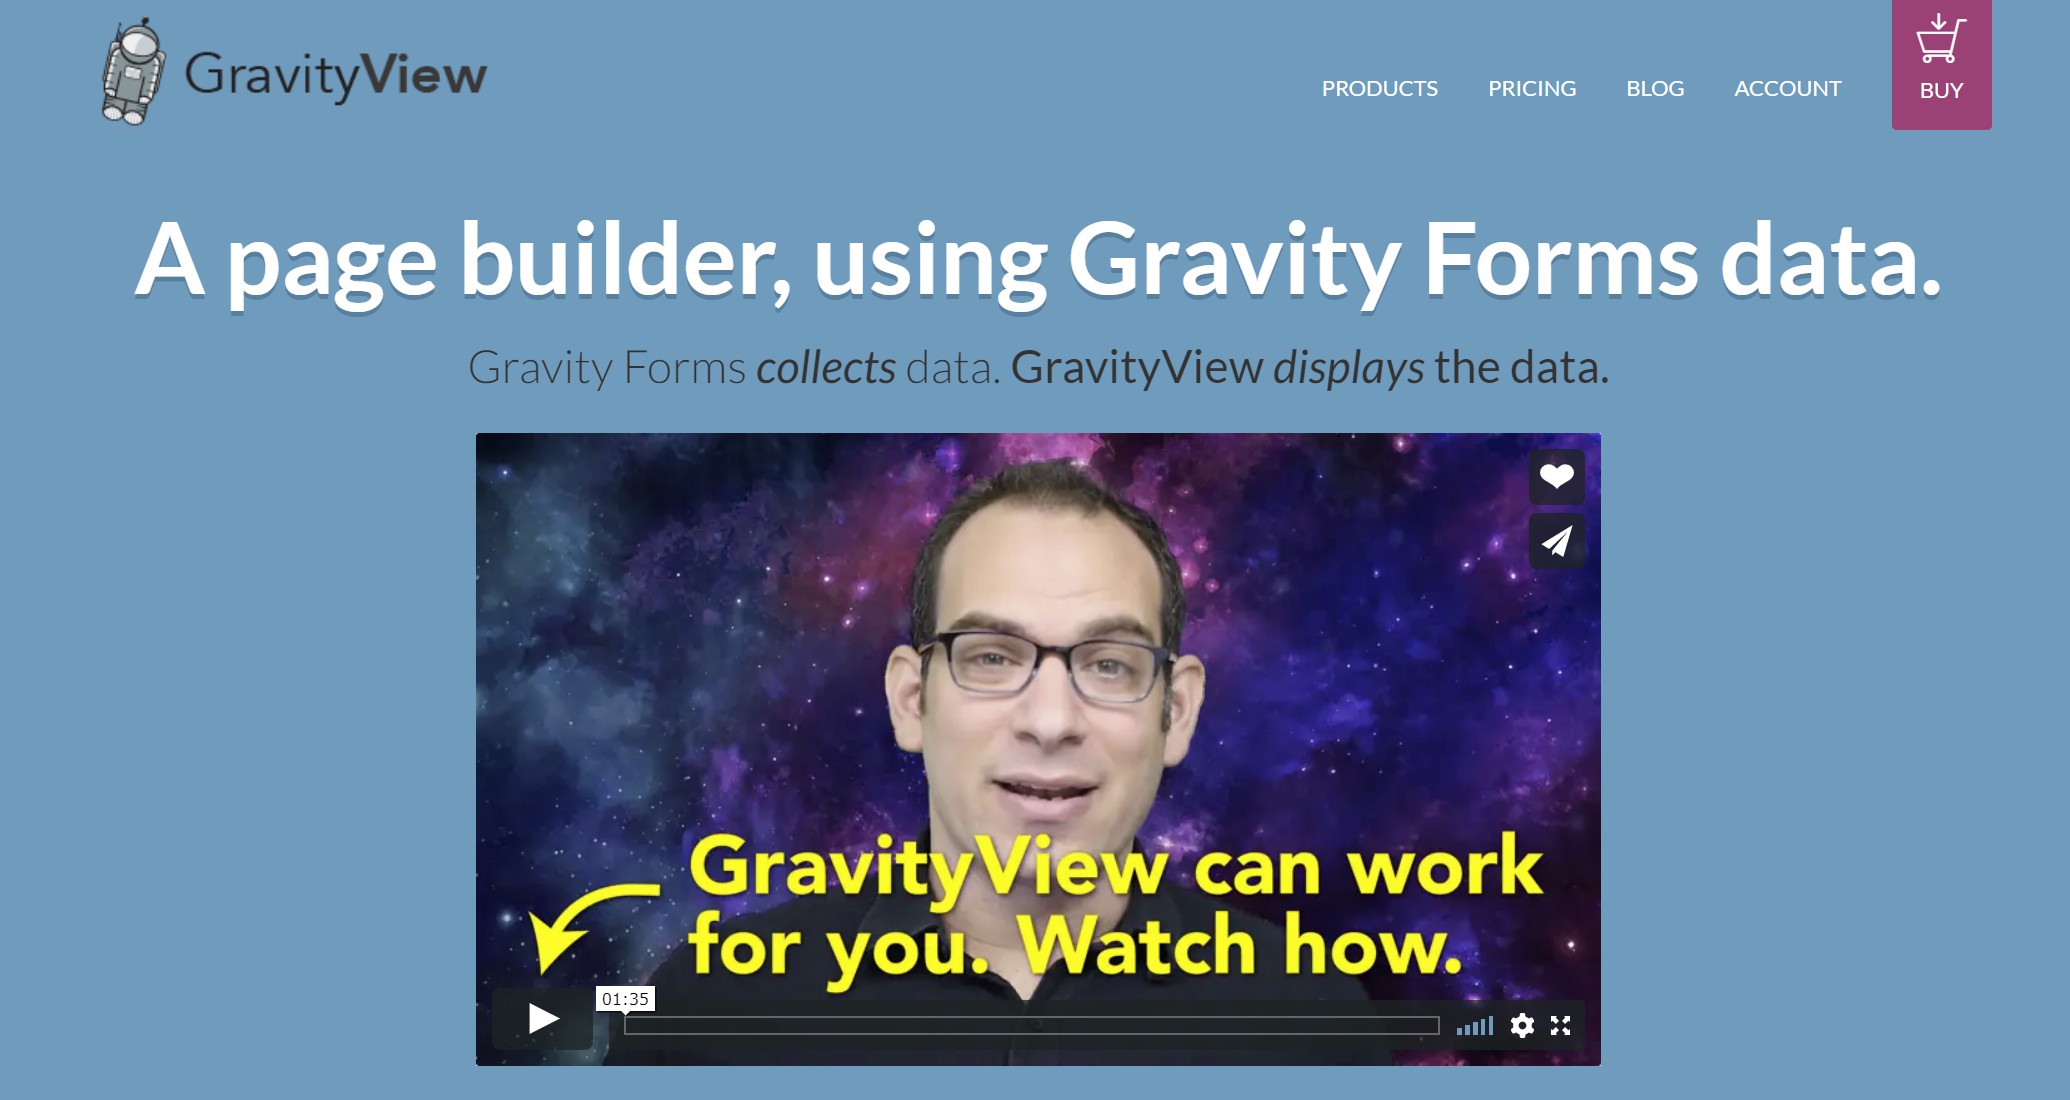 The GravityView homepage